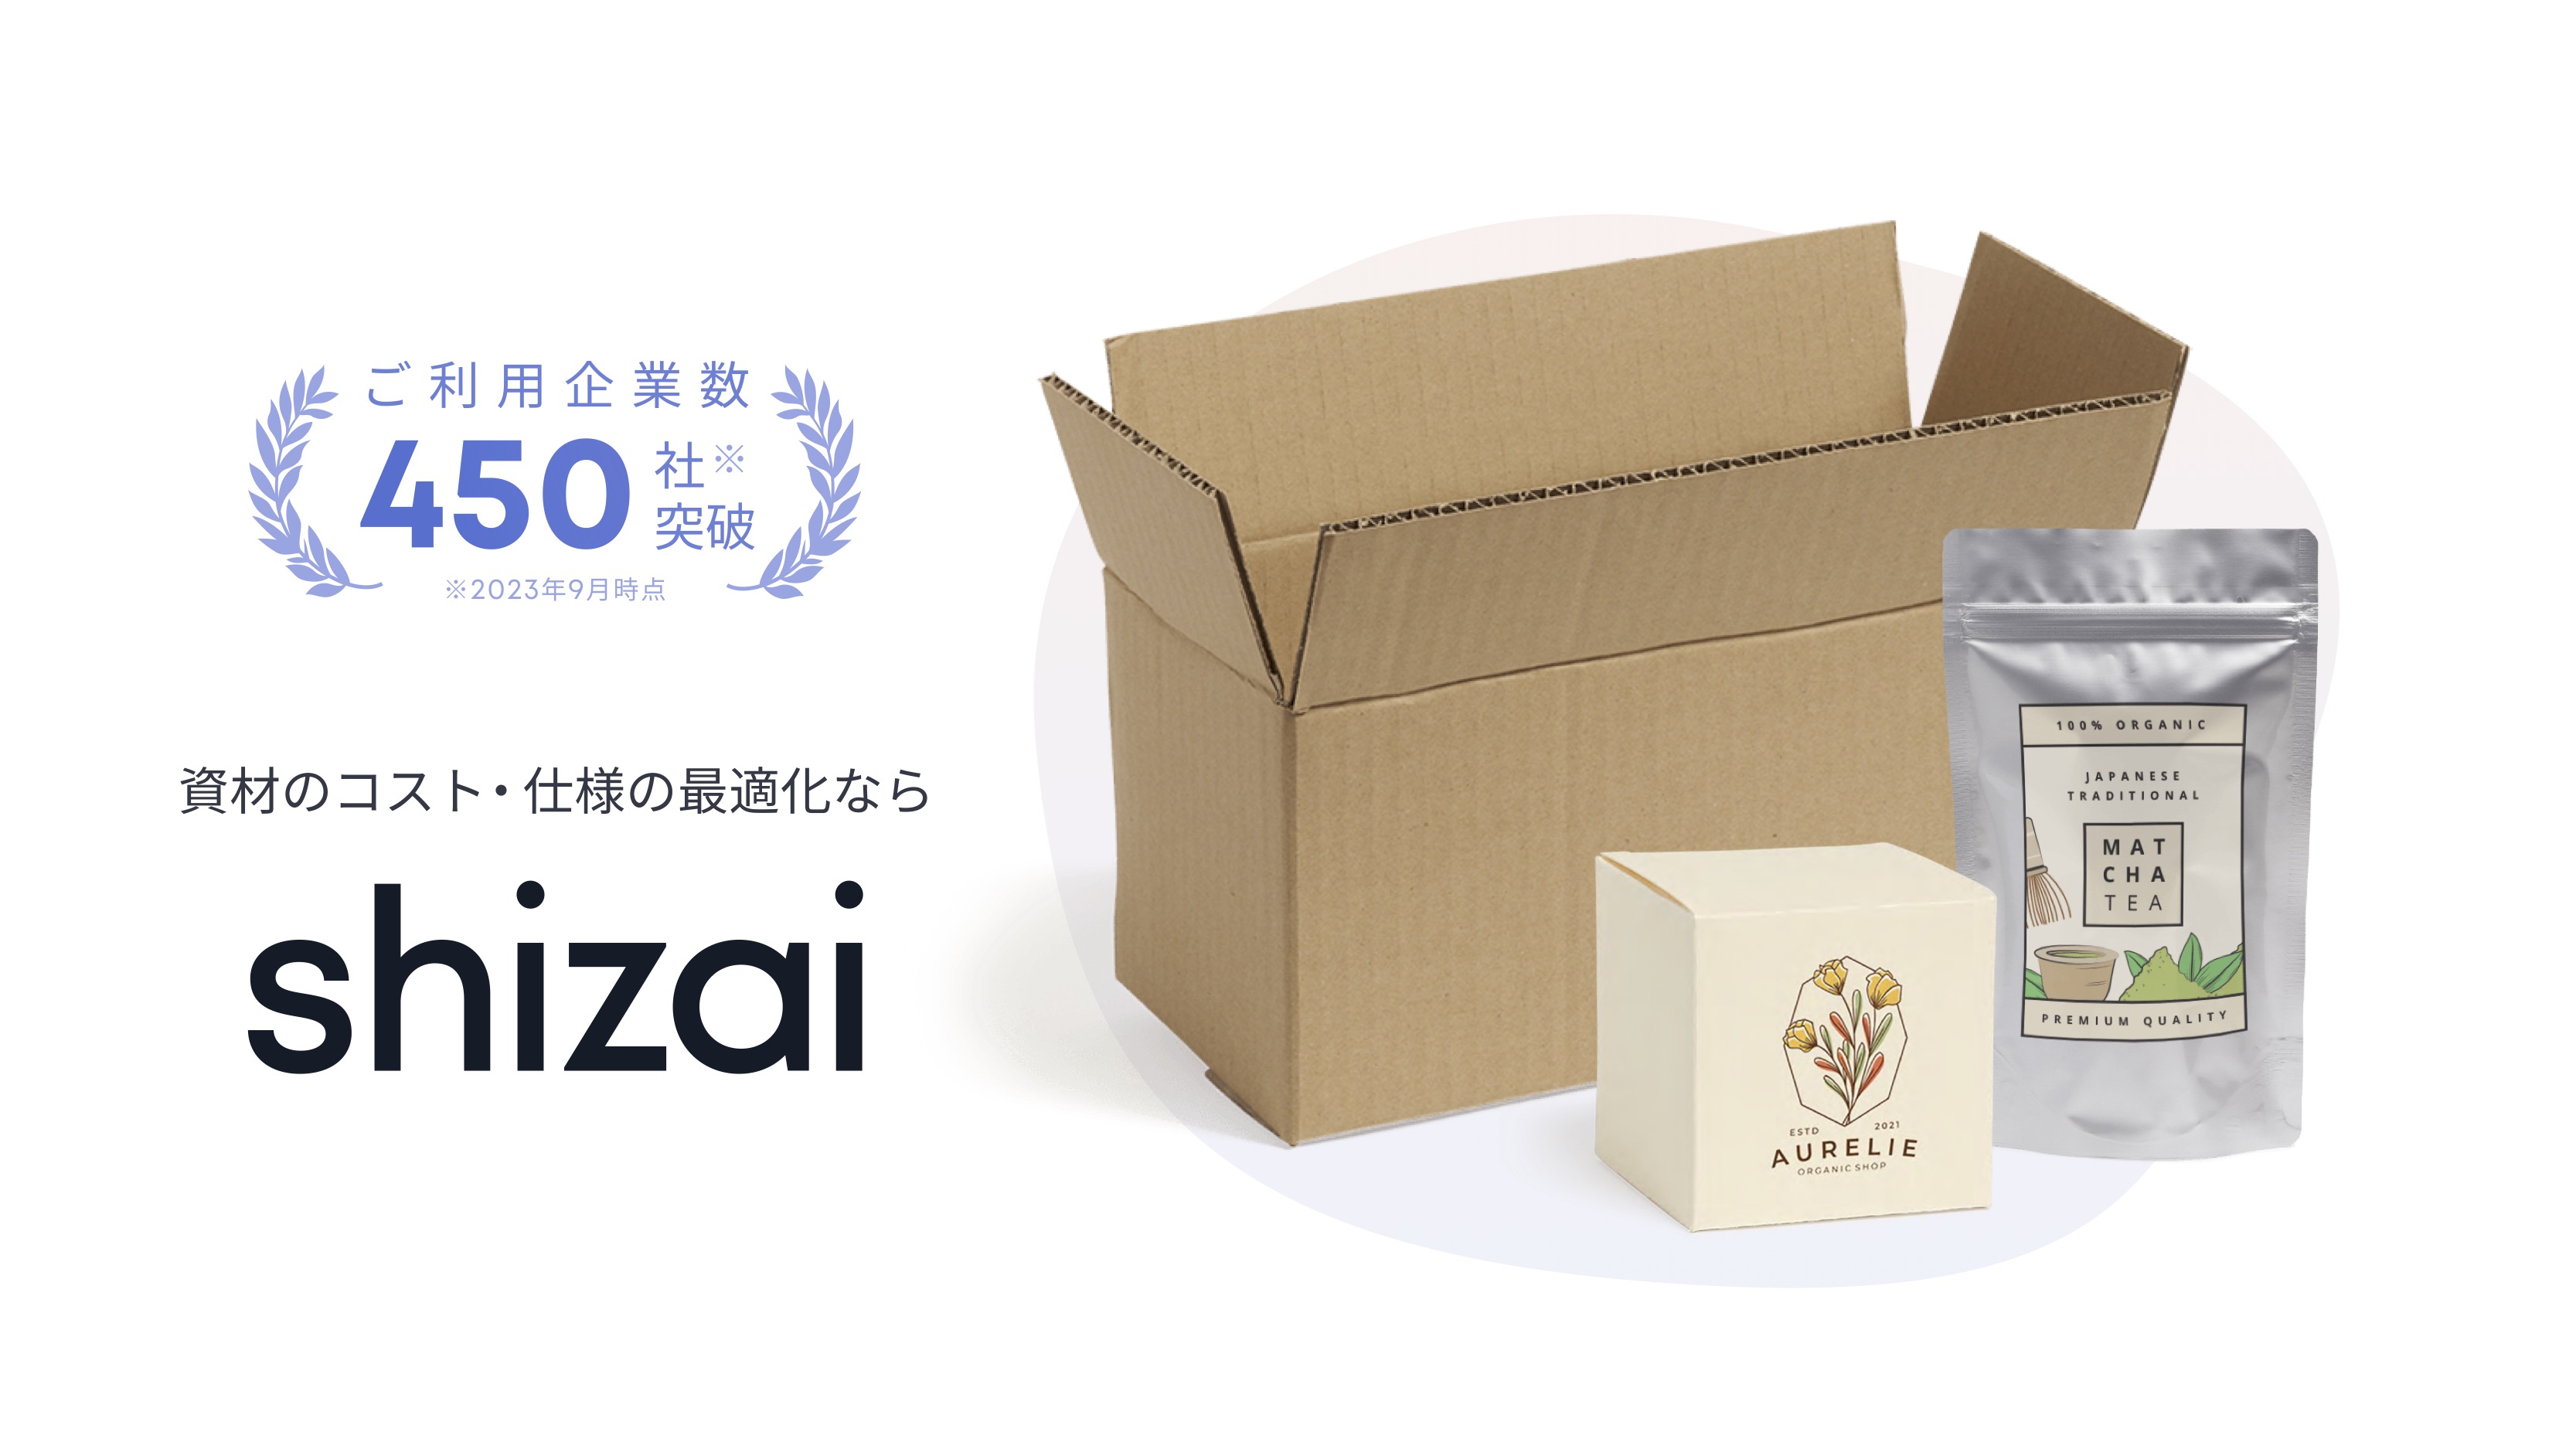 「shizai」サービス概要資料ダウンロード